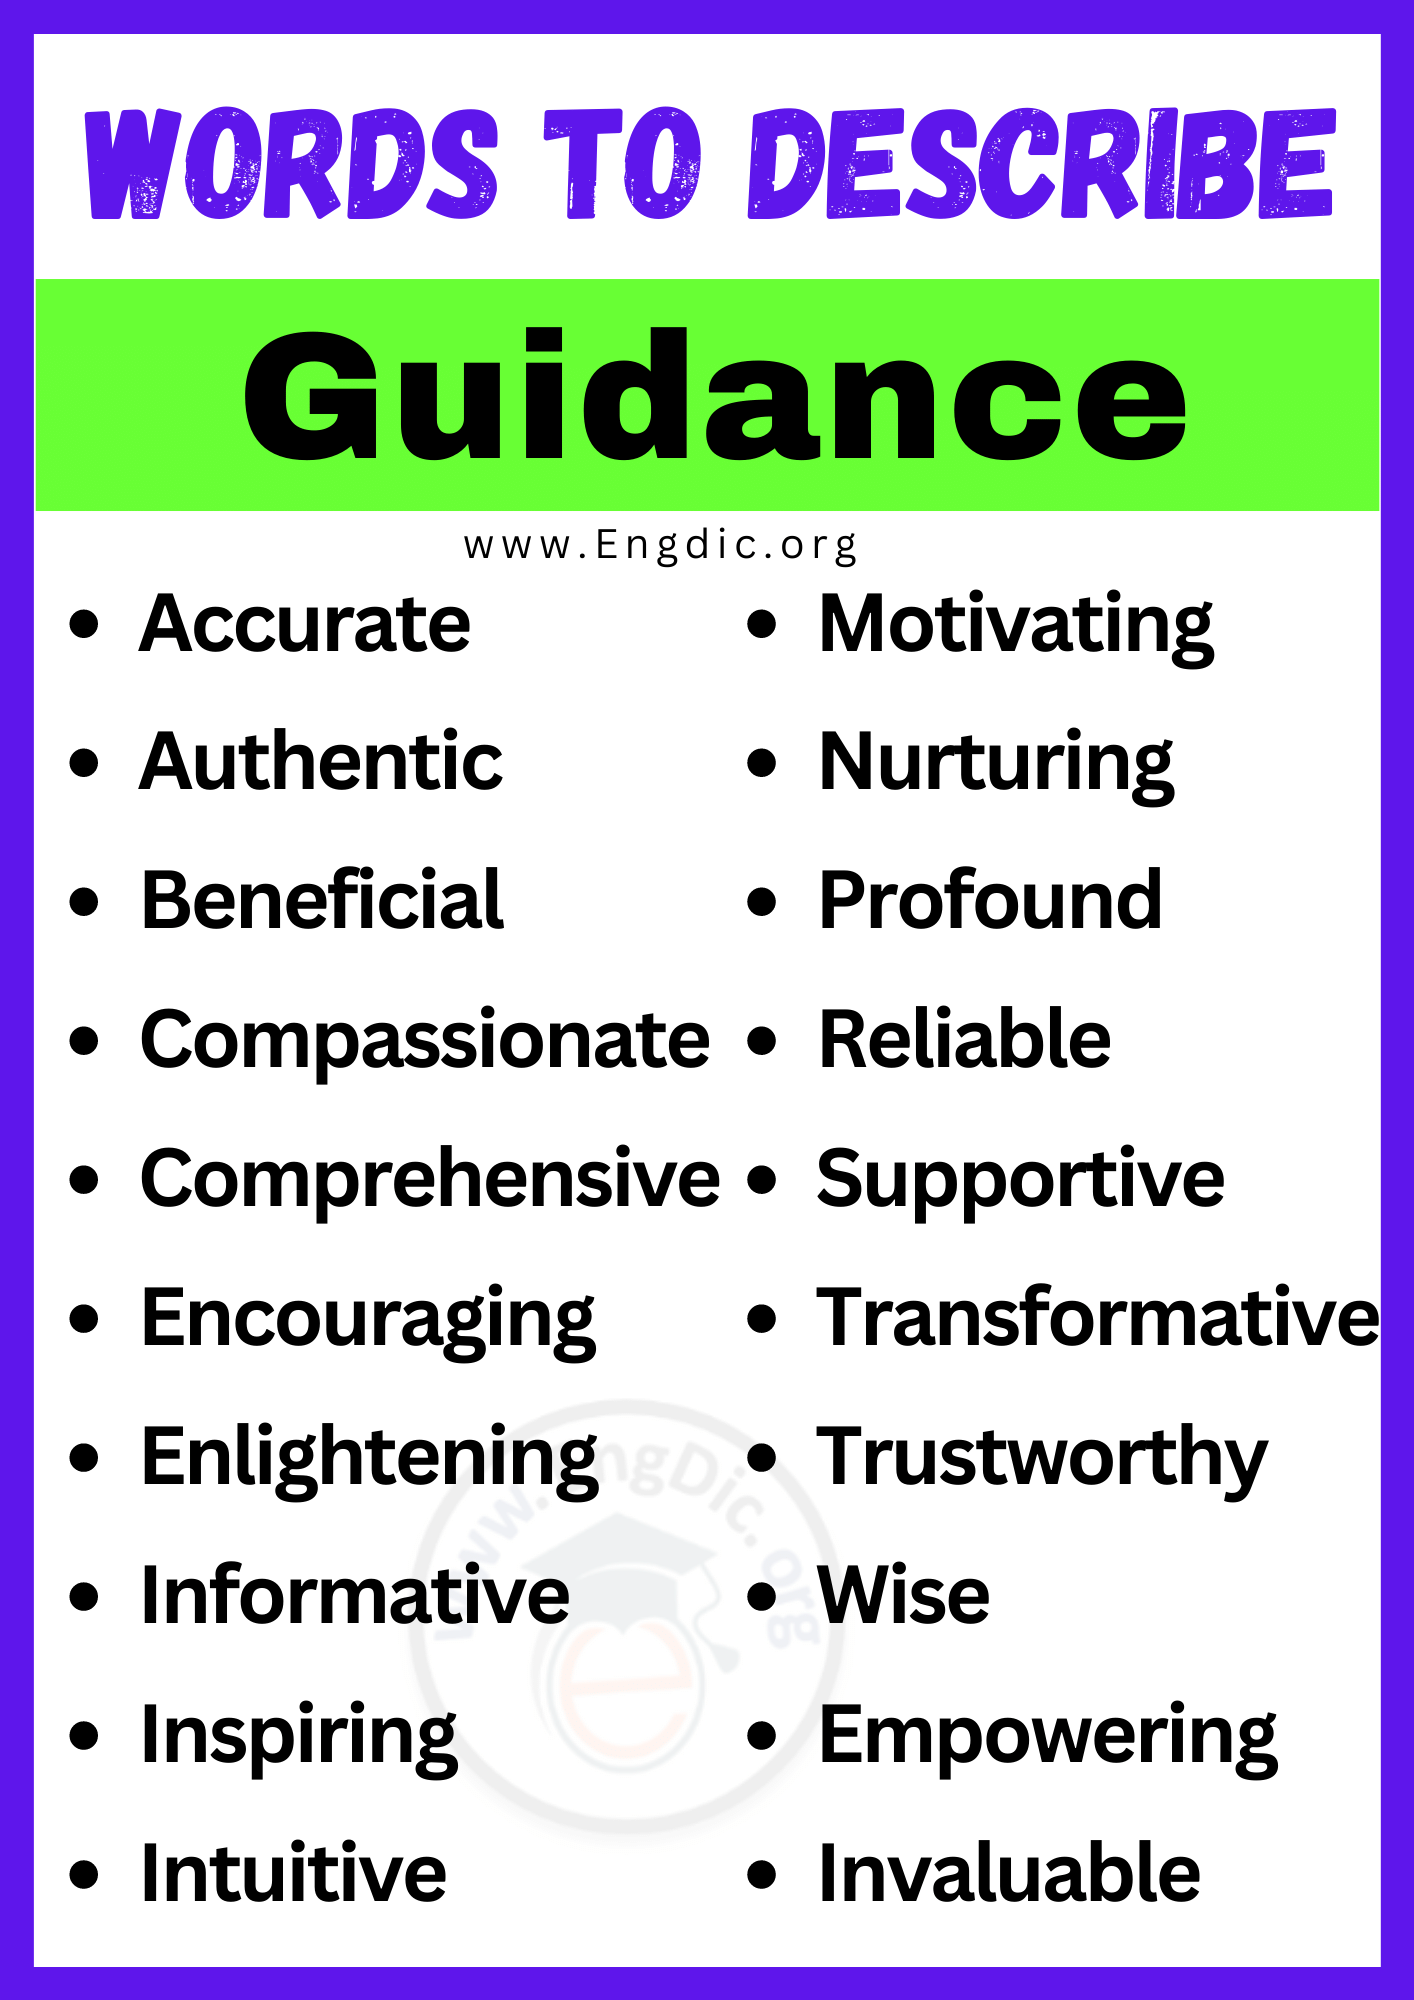 Words to Describe Guidance